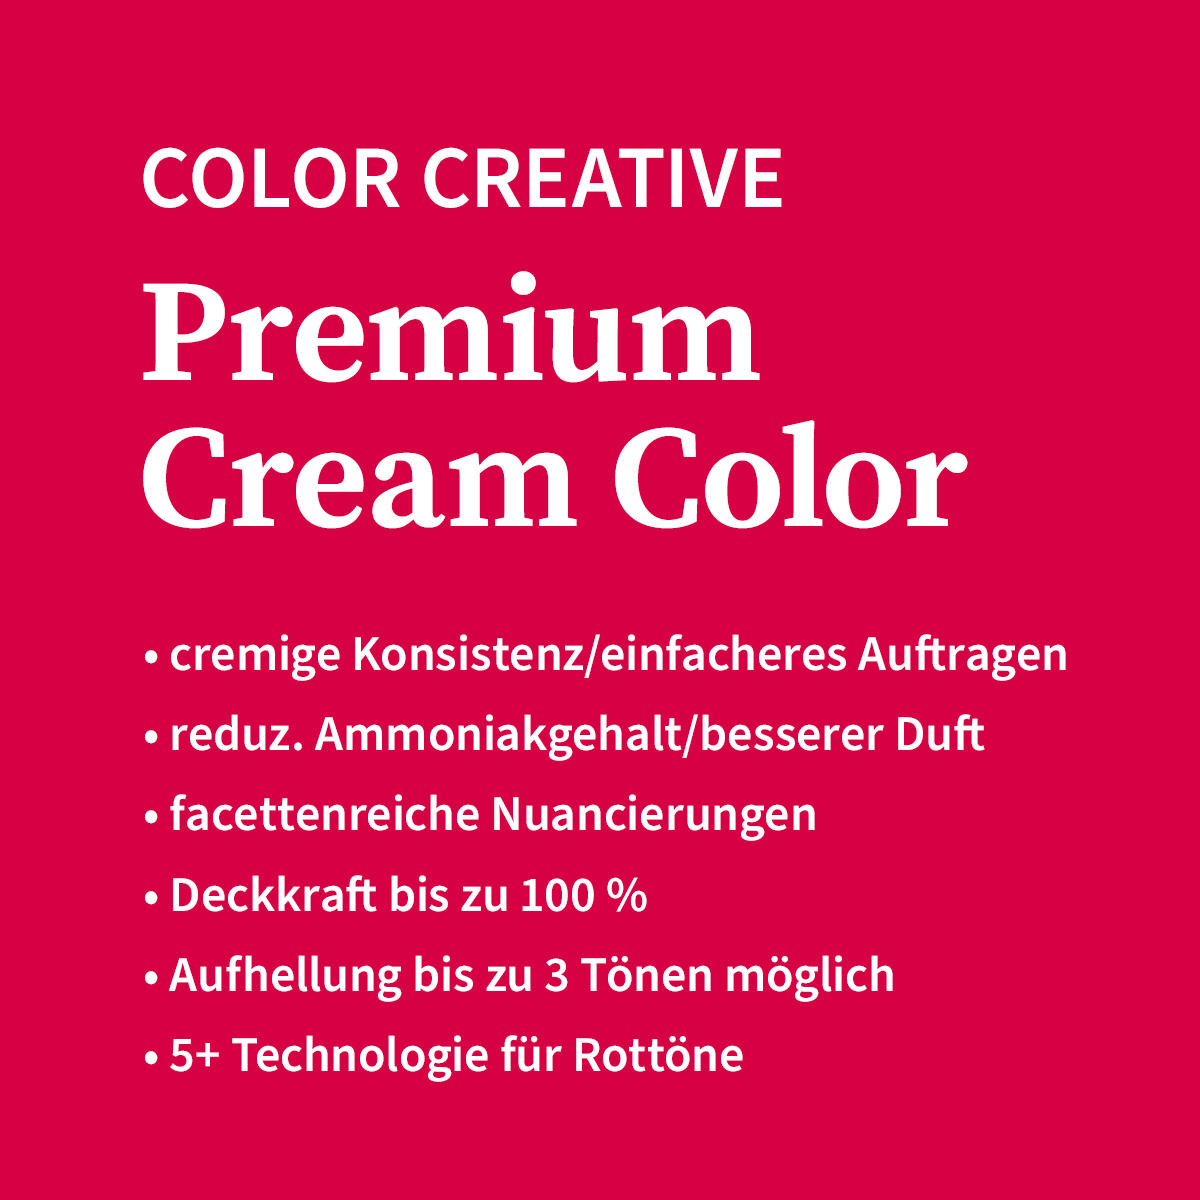 Basler Color Creative Premium Cream Color 12/1 cenere bionda extra, tubo 60 ml - 4